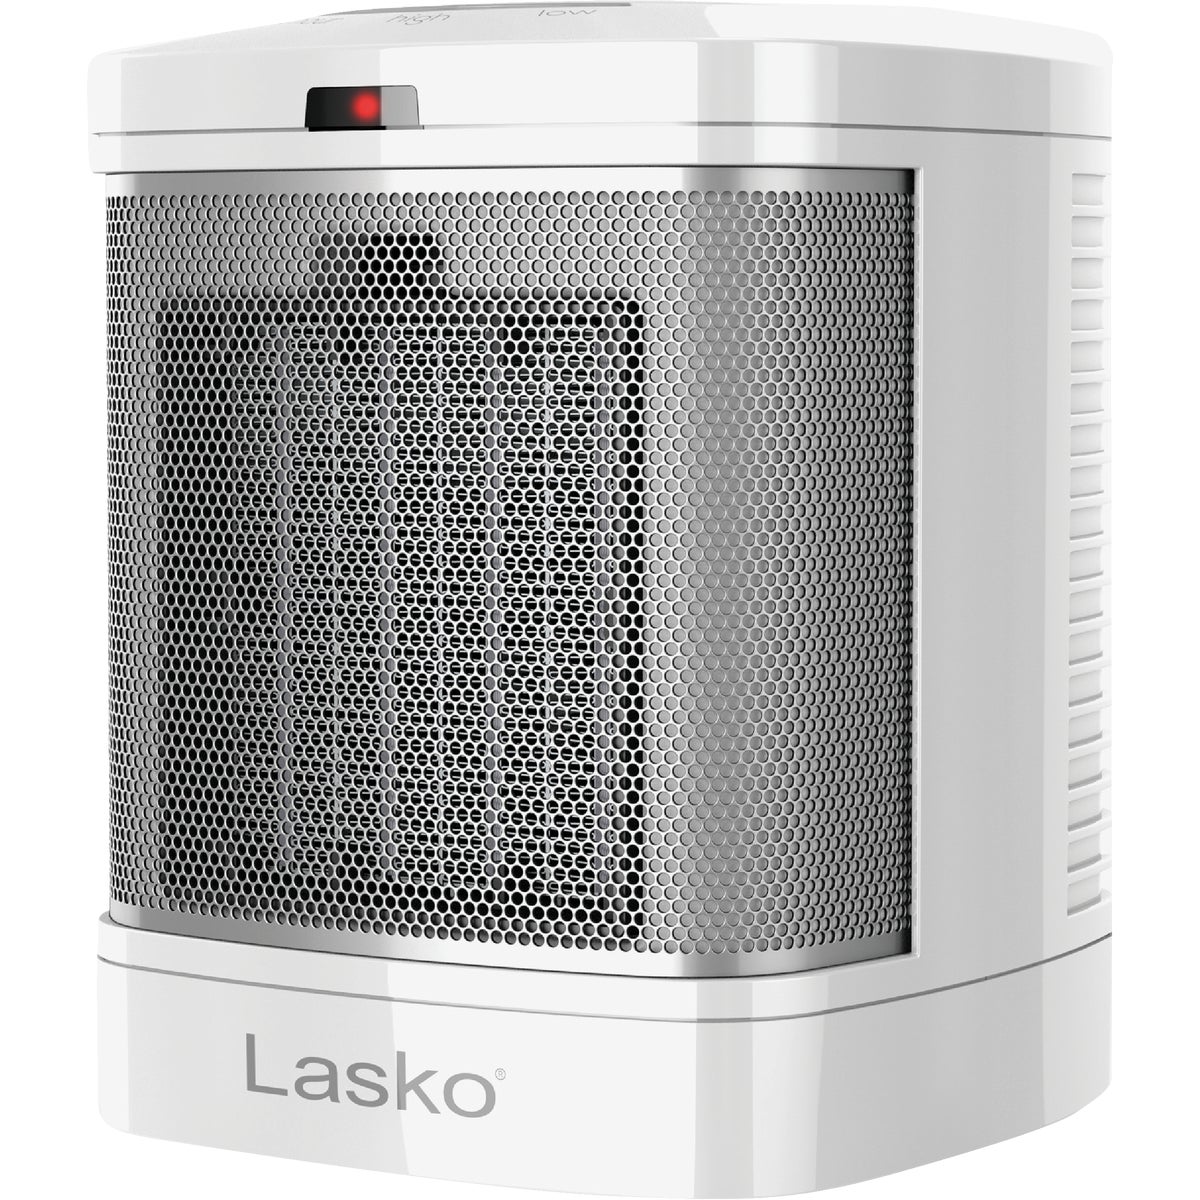 Lasko 1500-Watt 120-Volt Bathroom Electric Space Heater